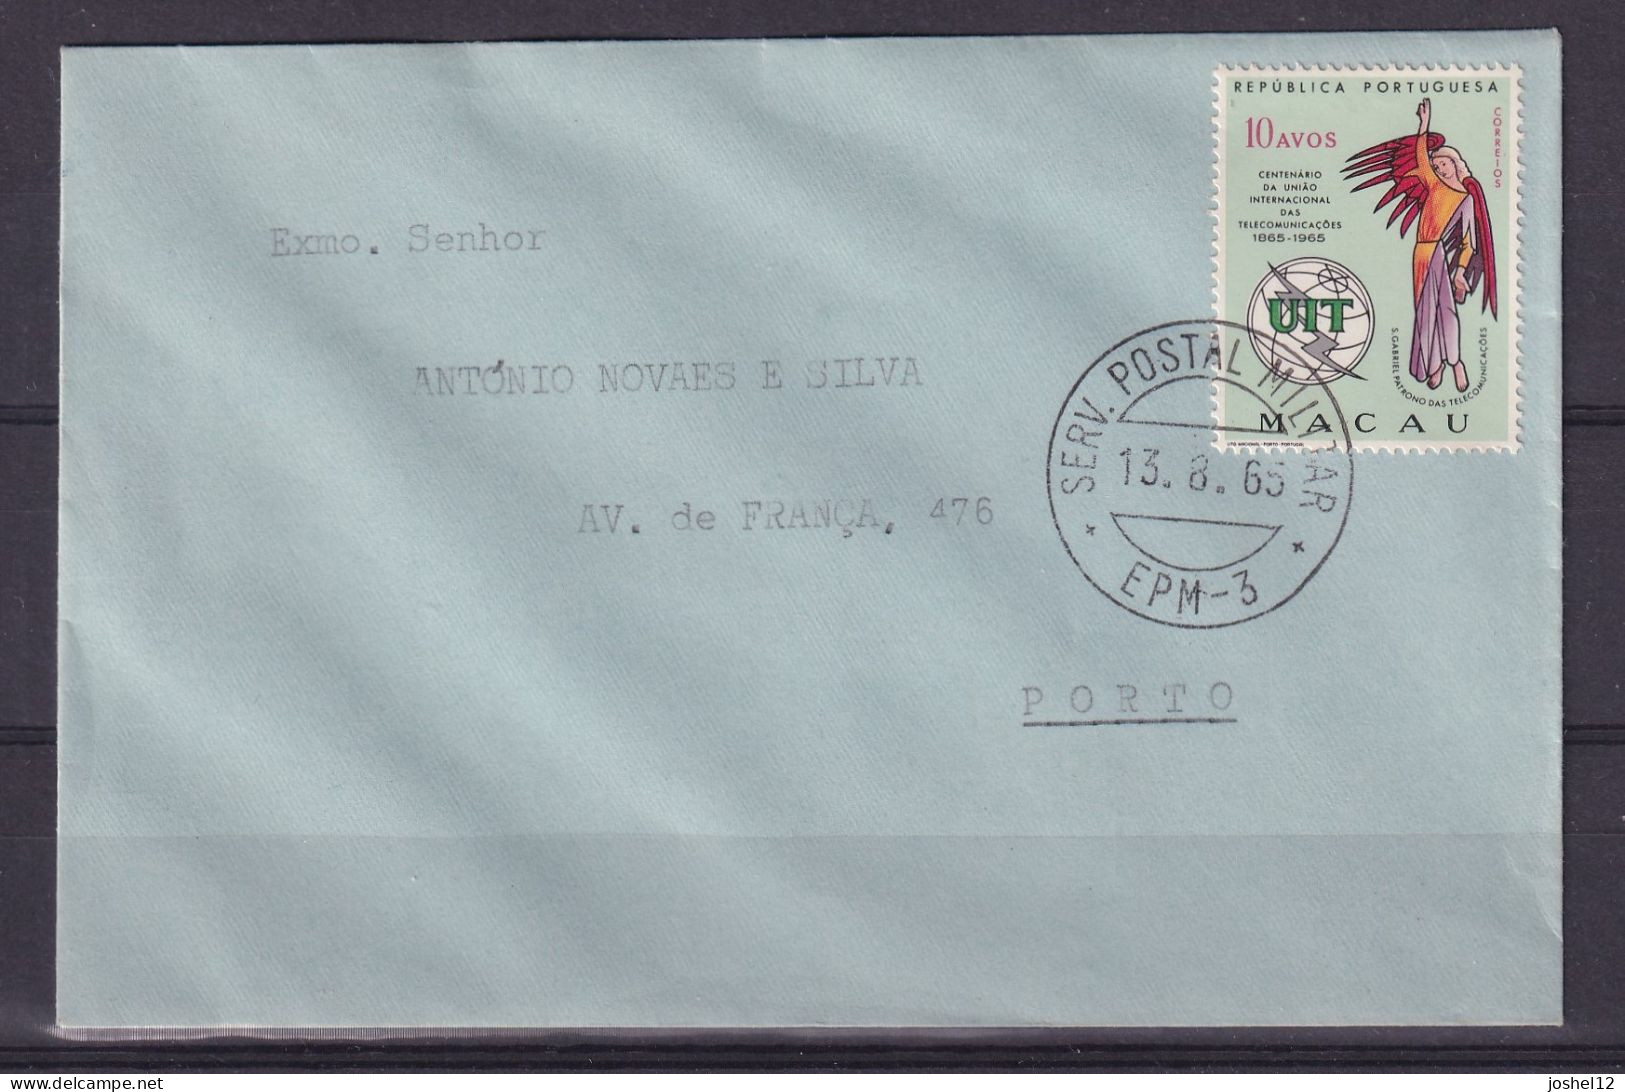 Macau Macao 1965 Military Cover To Portugal W/EPM3 Postmark - Briefe U. Dokumente